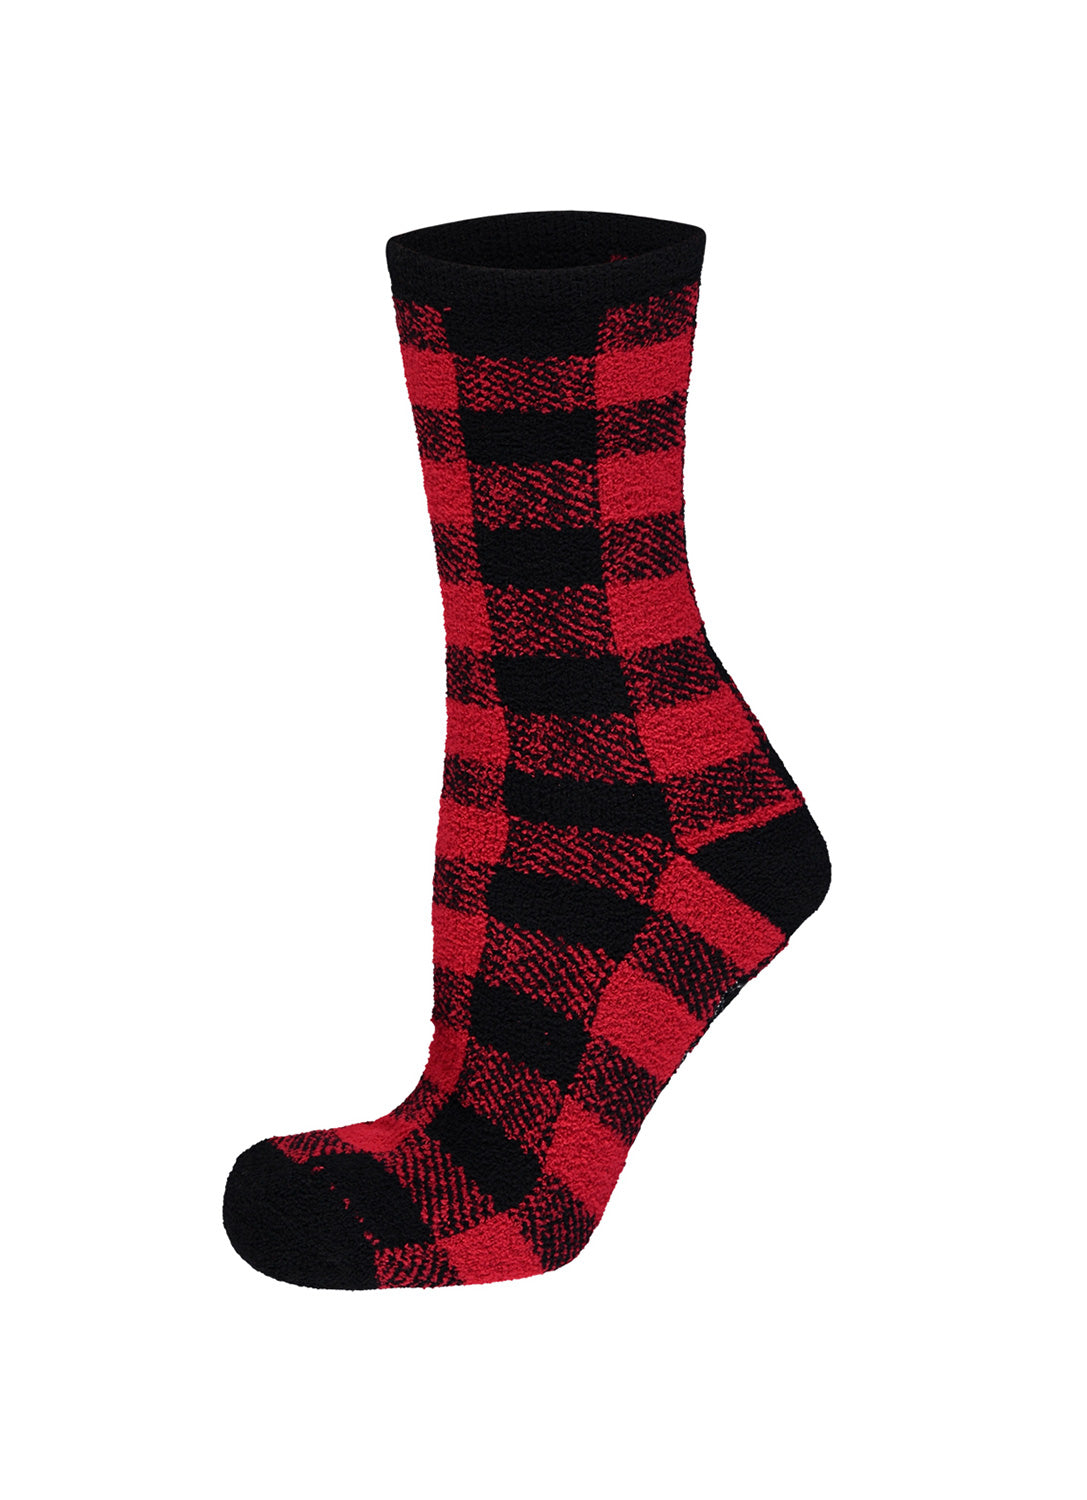 Mens Red Plaid Family Sleepwear Socks